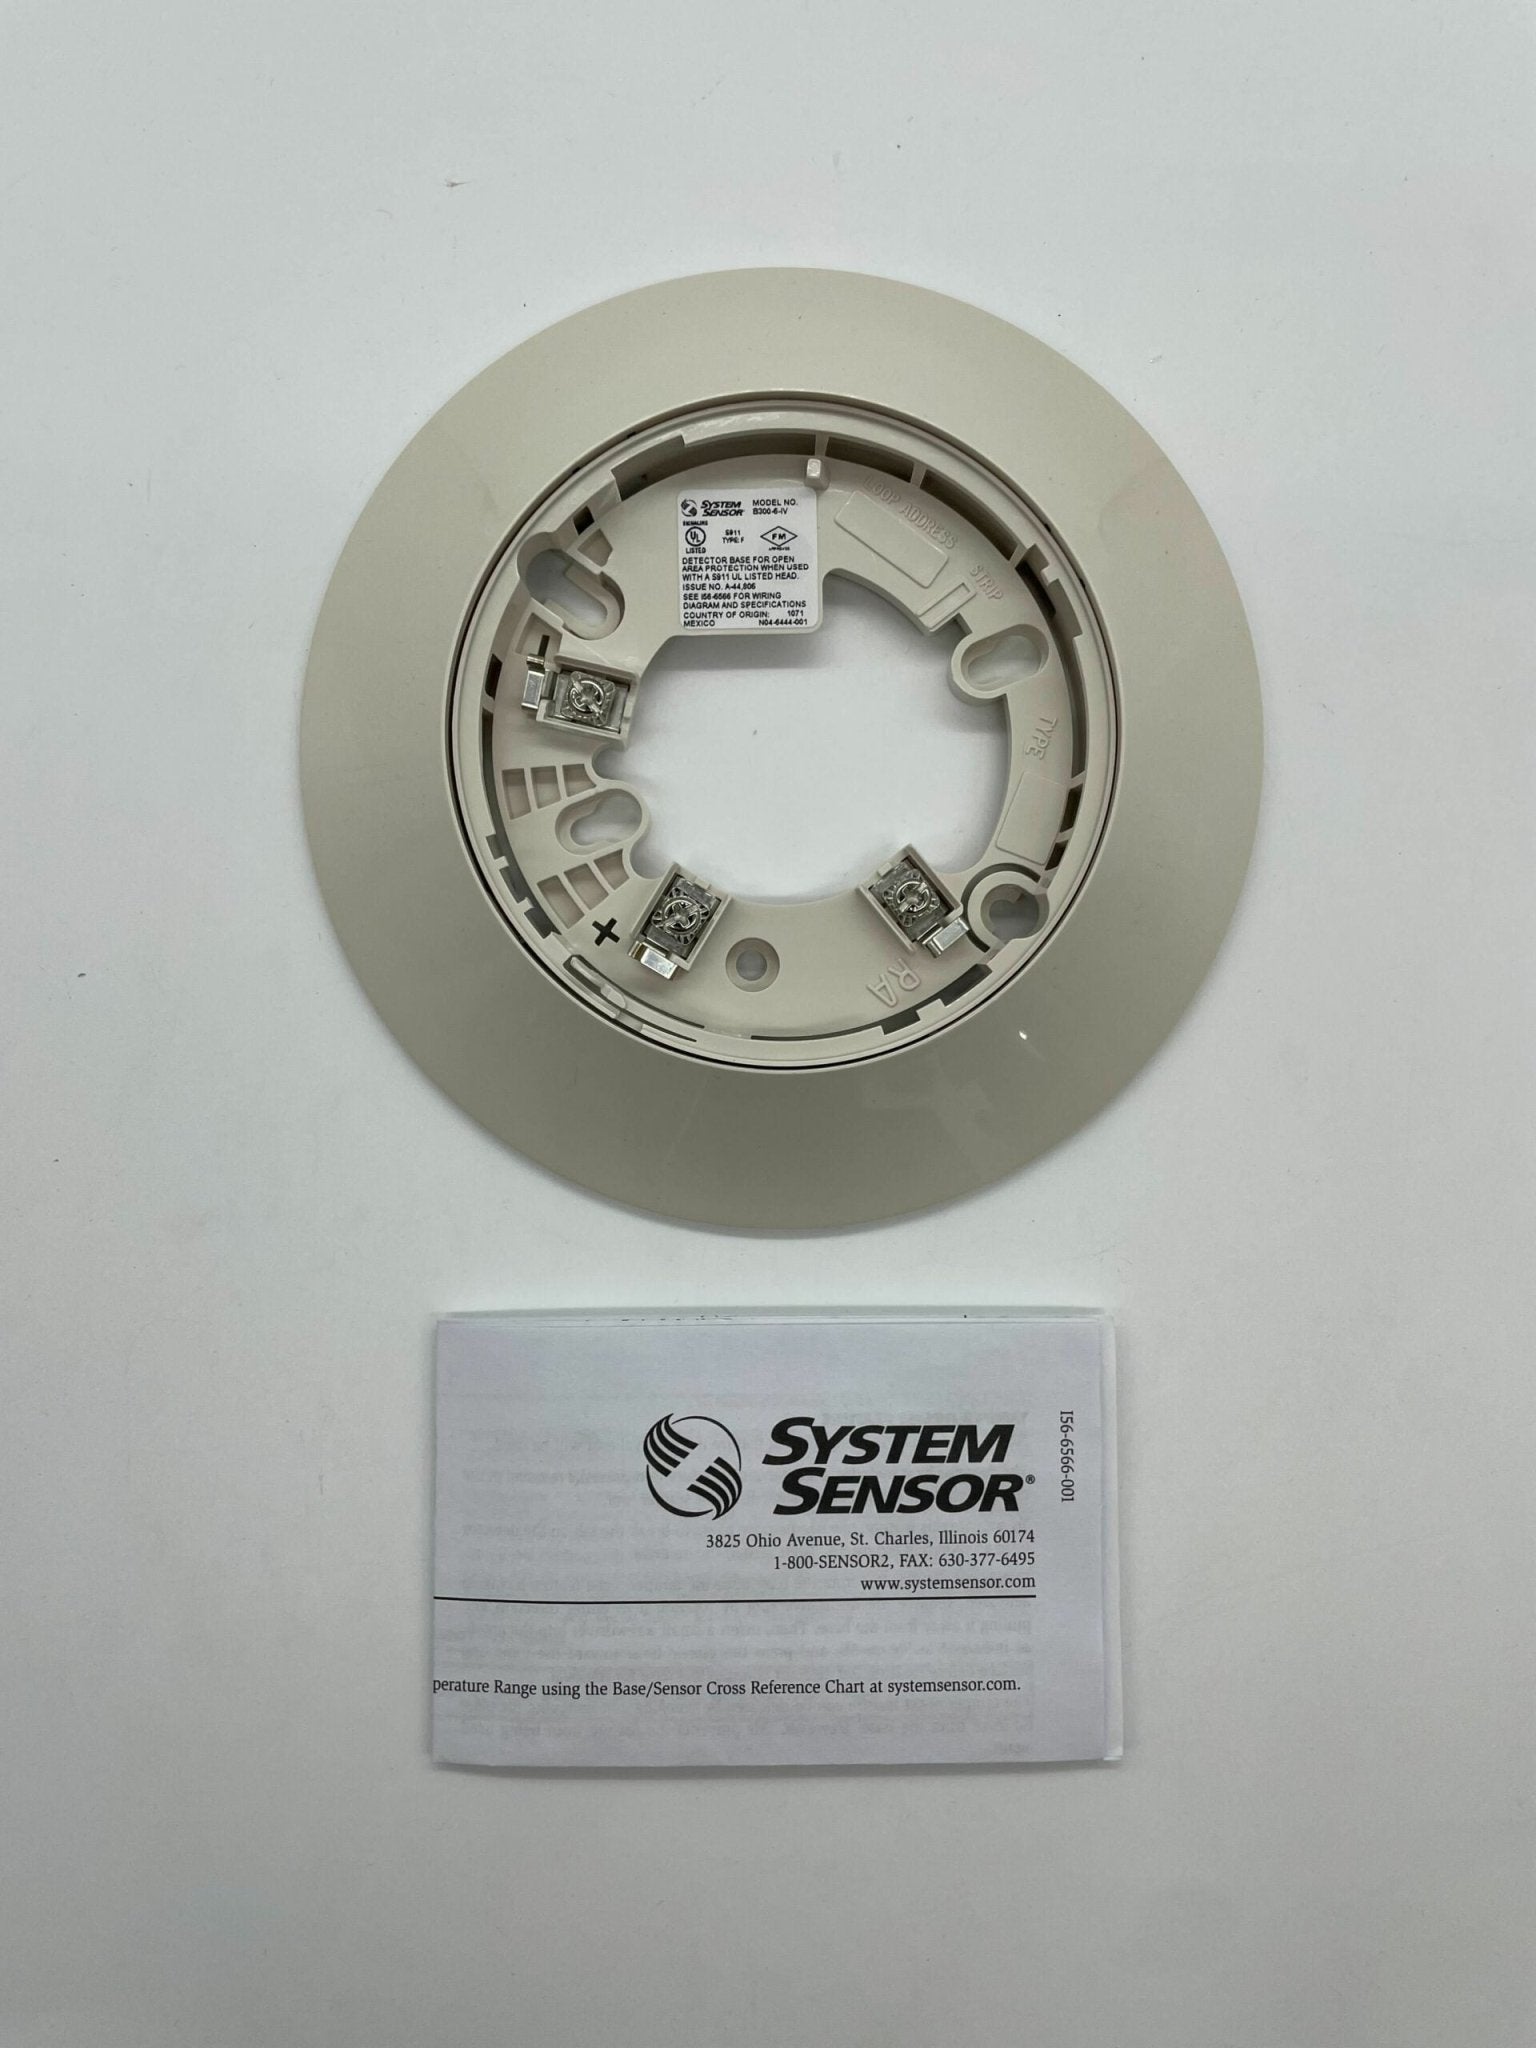 System Sensor B300-6-IV - The Fire Alarm Supplier